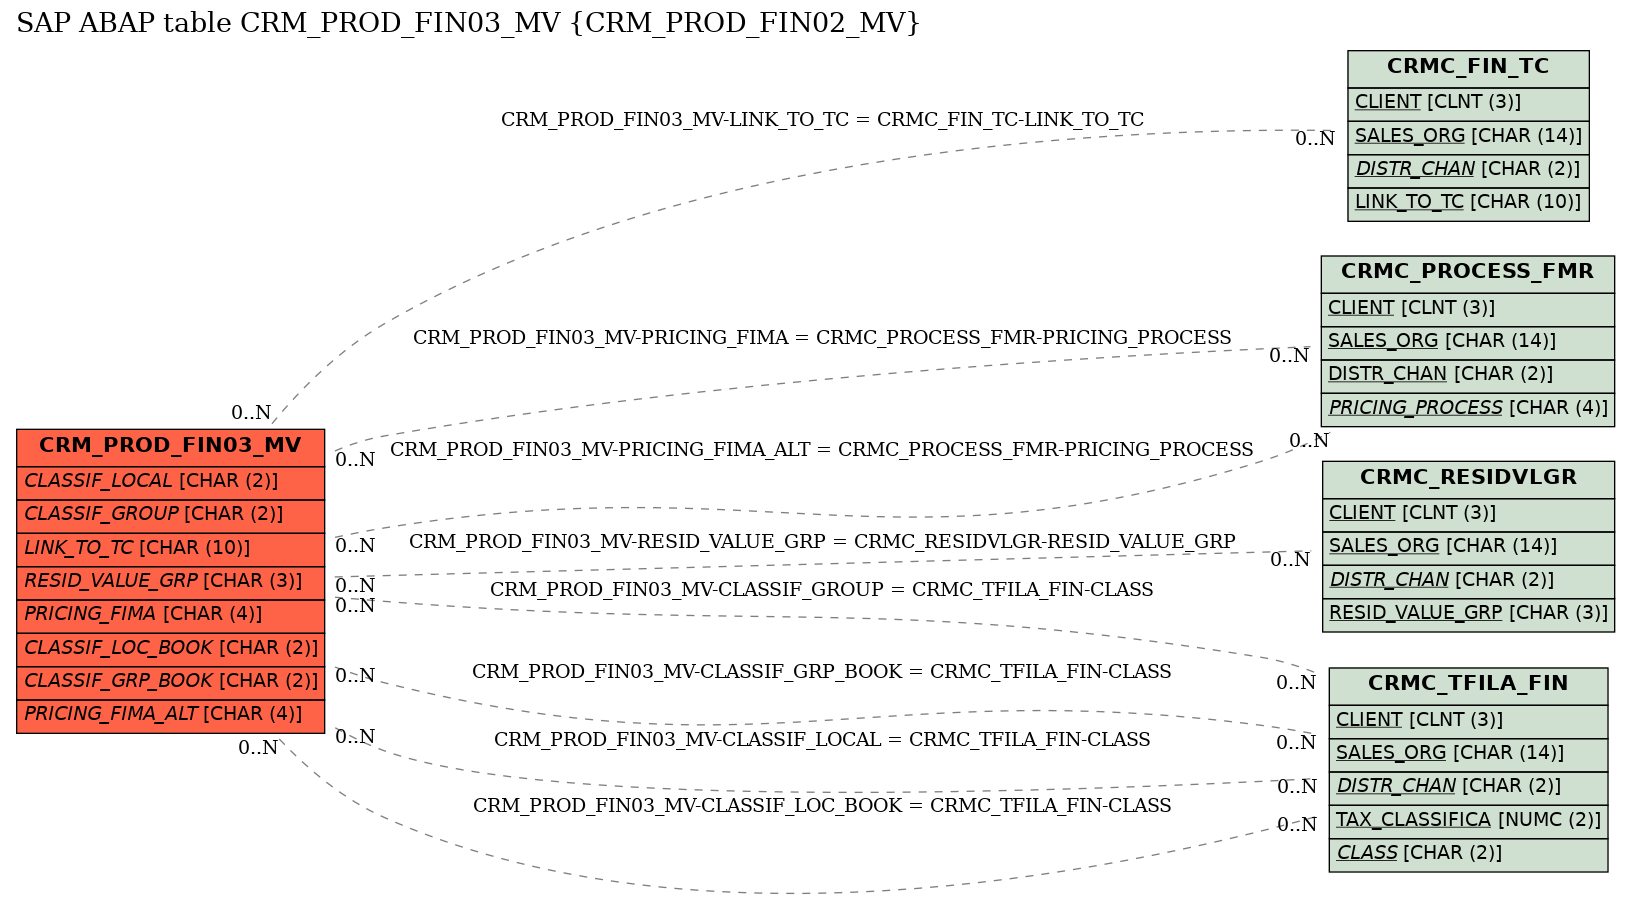 E-R Diagram for table CRM_PROD_FIN03_MV (CRM_PROD_FIN02_MV)